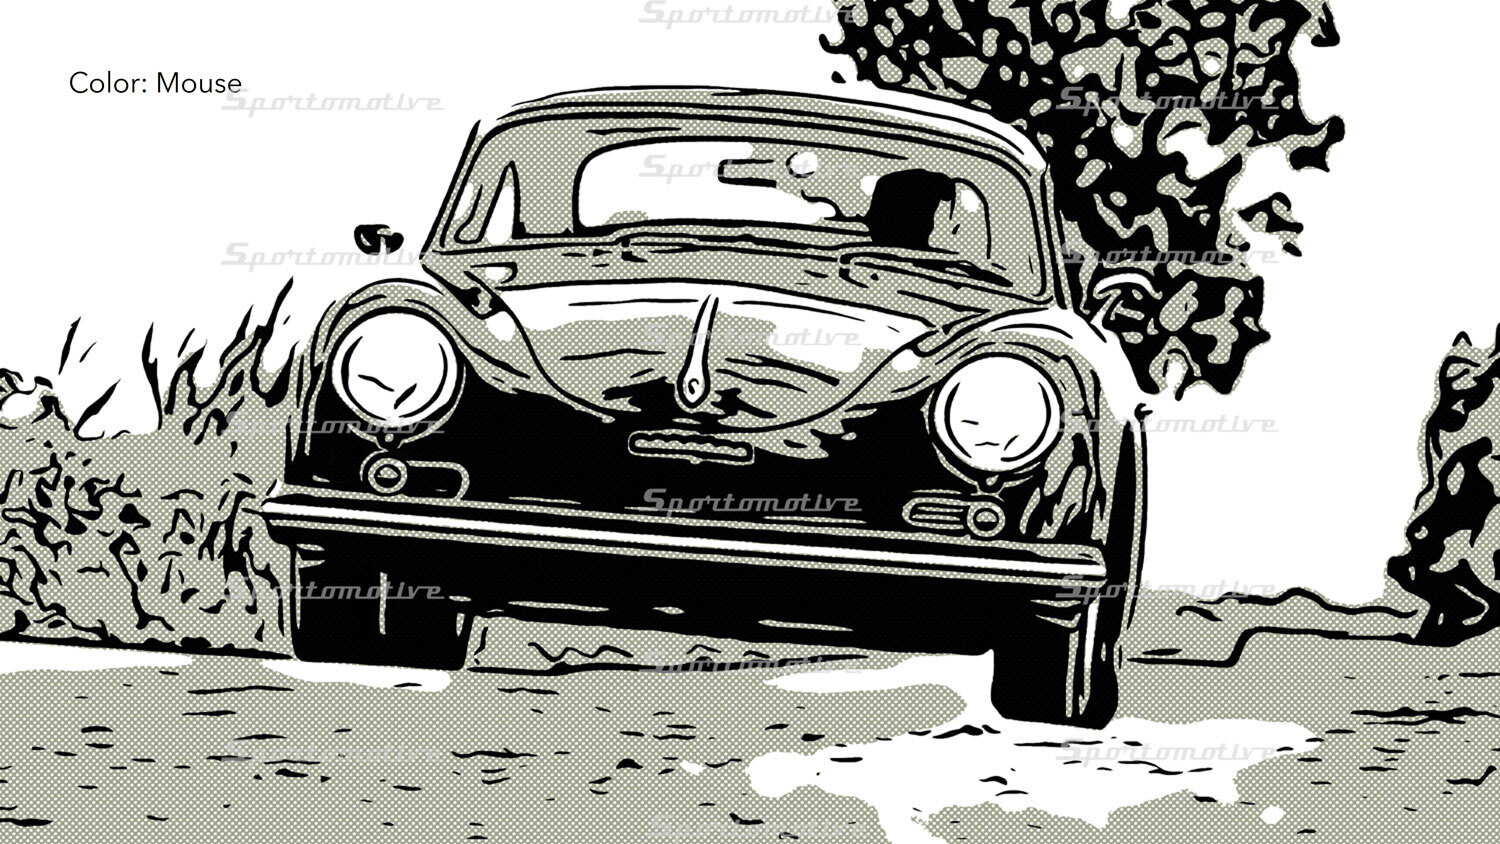 Hommage to the 'Ur-Porsche': the 356 - Monochrome Series